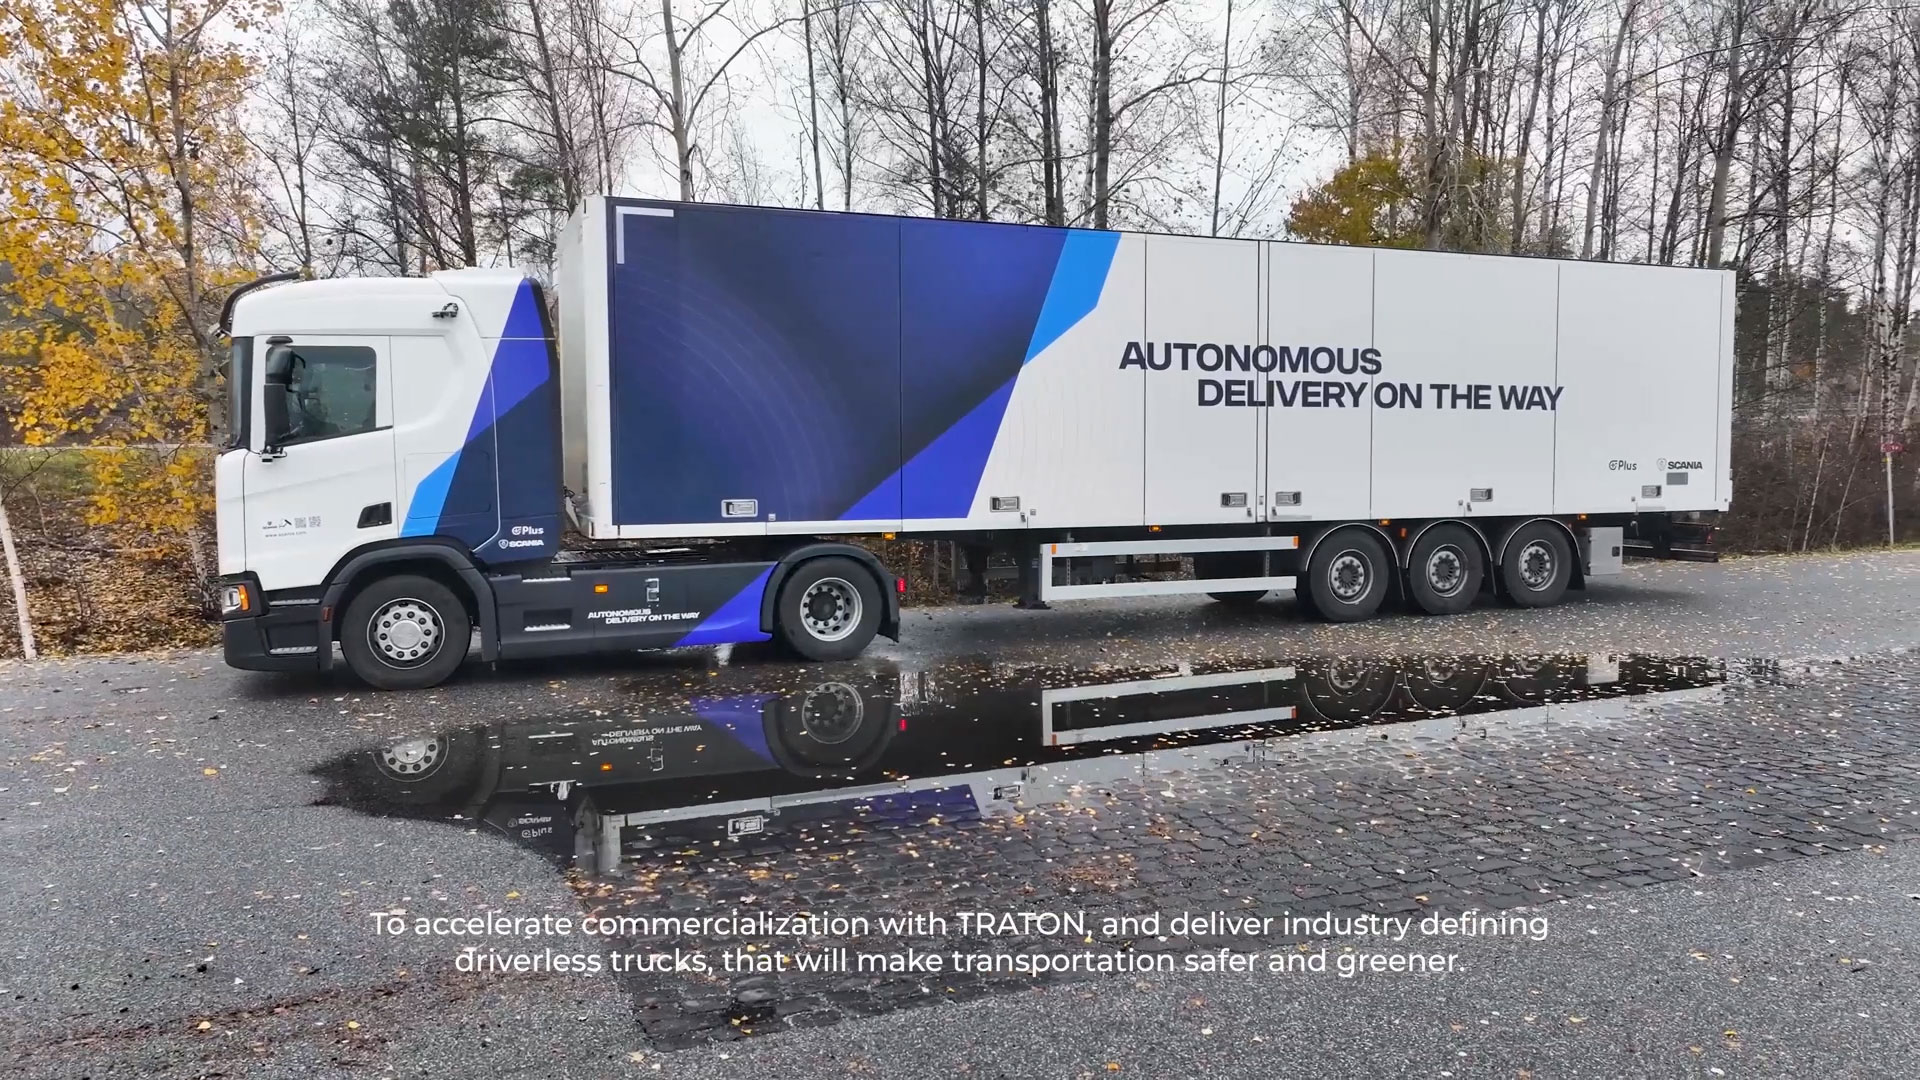 Plus and Scania, MAN and Navistar partner on Level 4 autonomous trucks